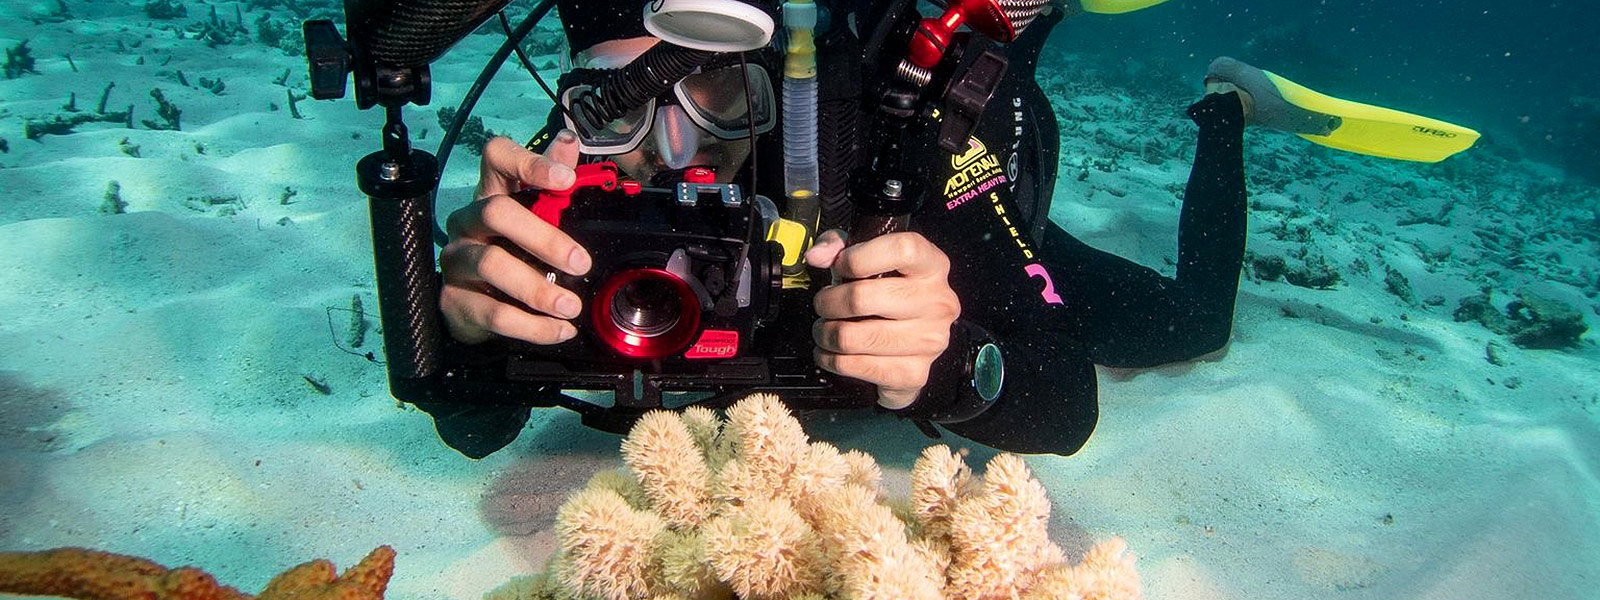 PADI Digital Underwater Photography Course Port Douglas